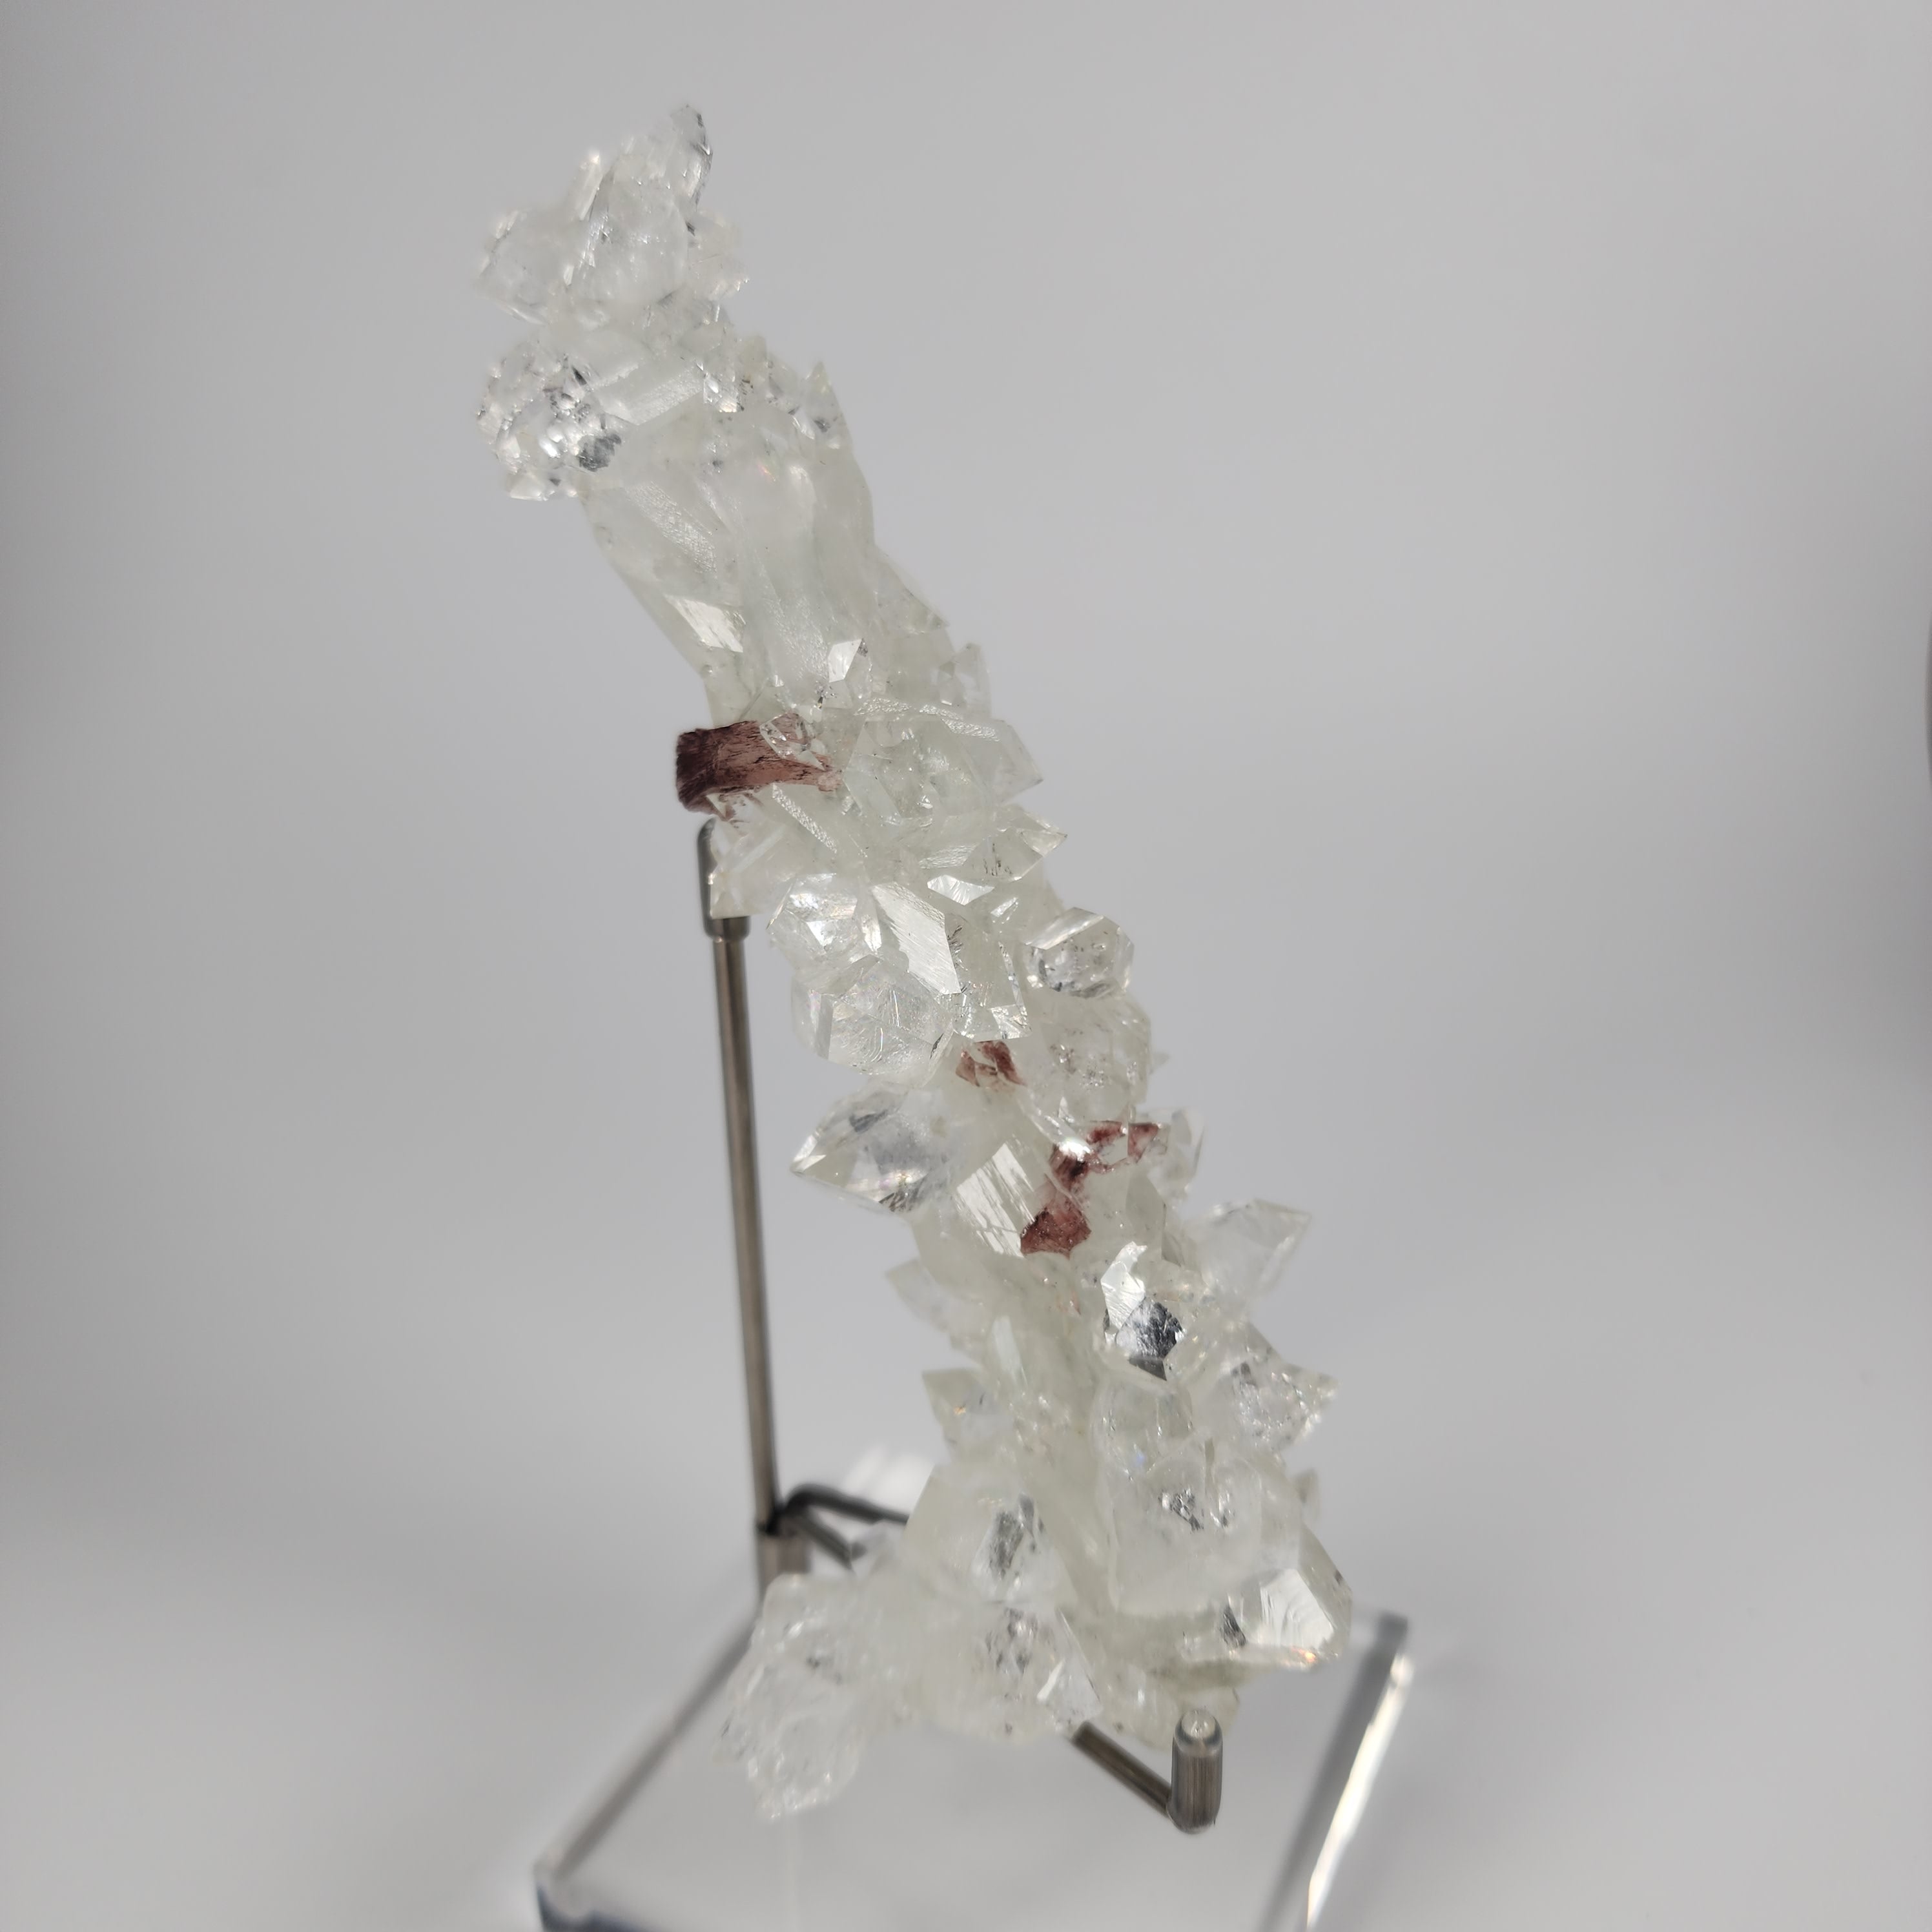 High Quality Diamond Apophyllite Specimen #14 from Jalgaon District, Maharashtra, India